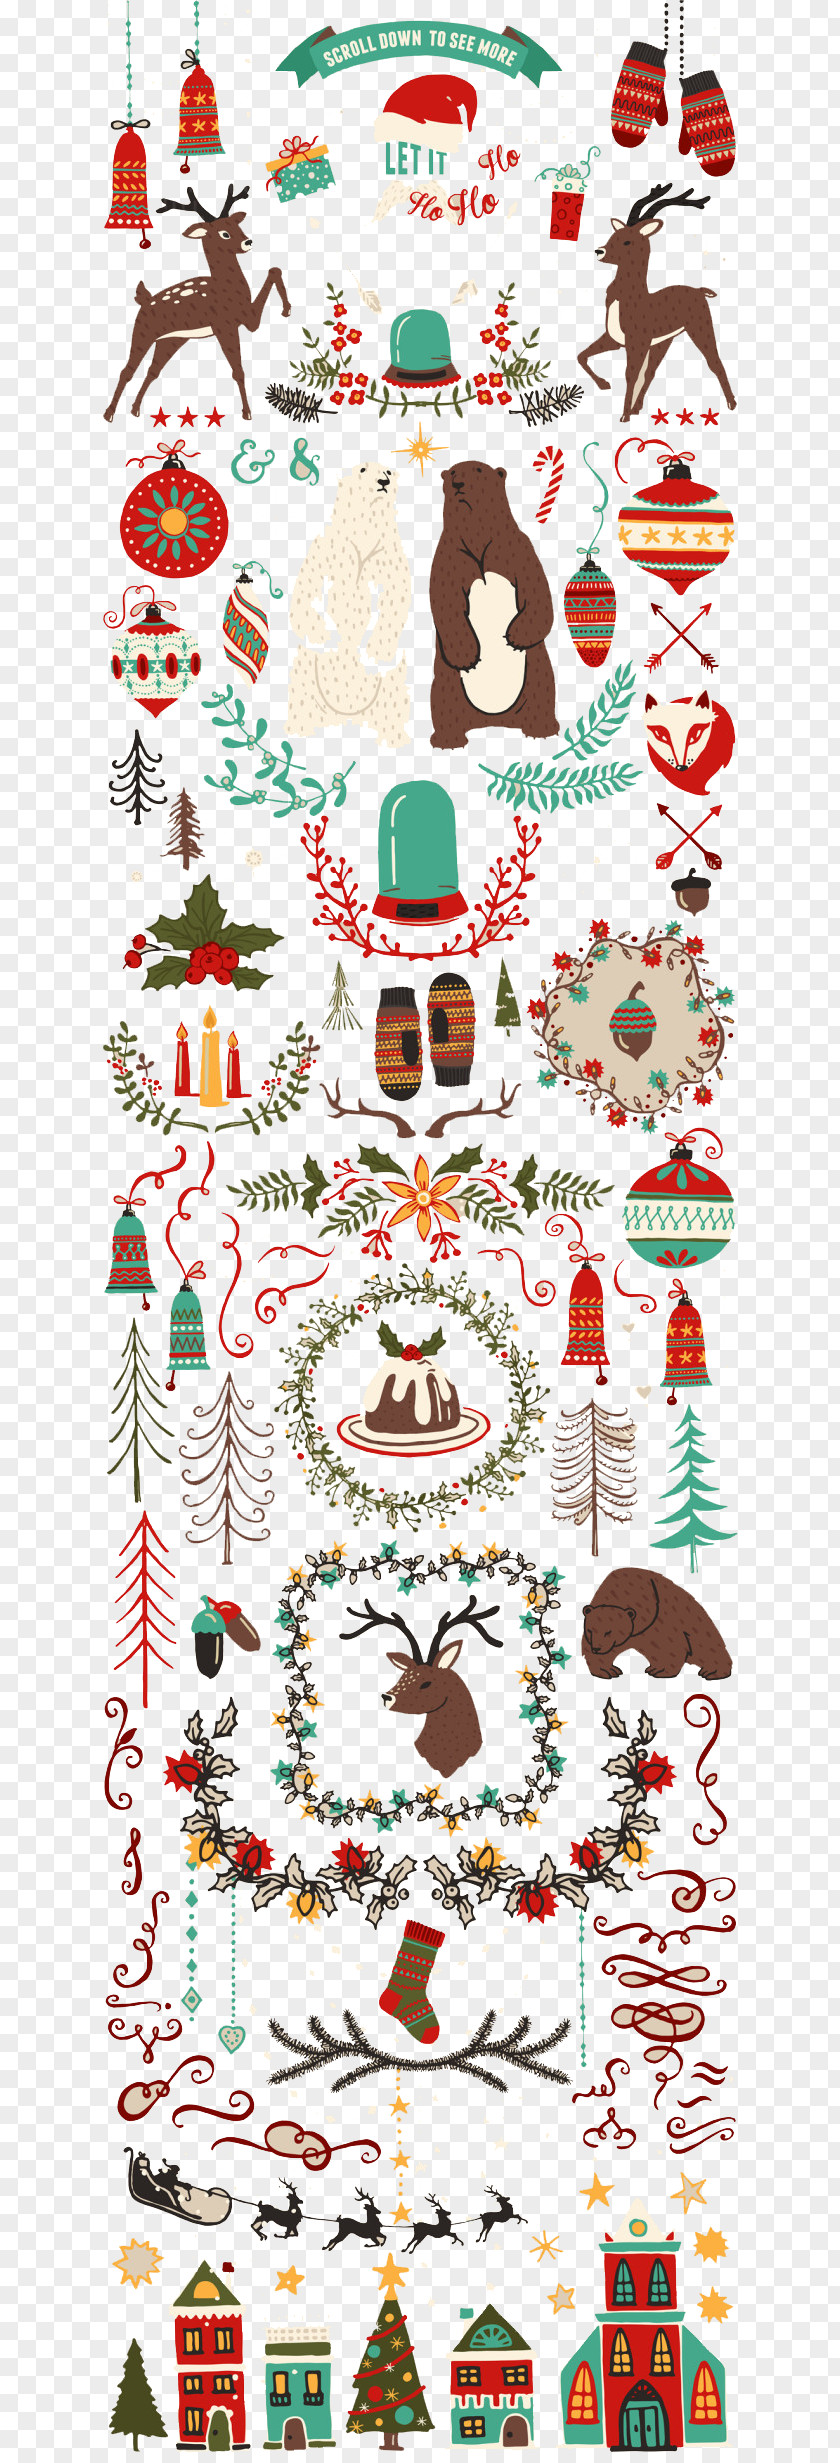 Christmas Elements And Holiday Season Illustration PNG